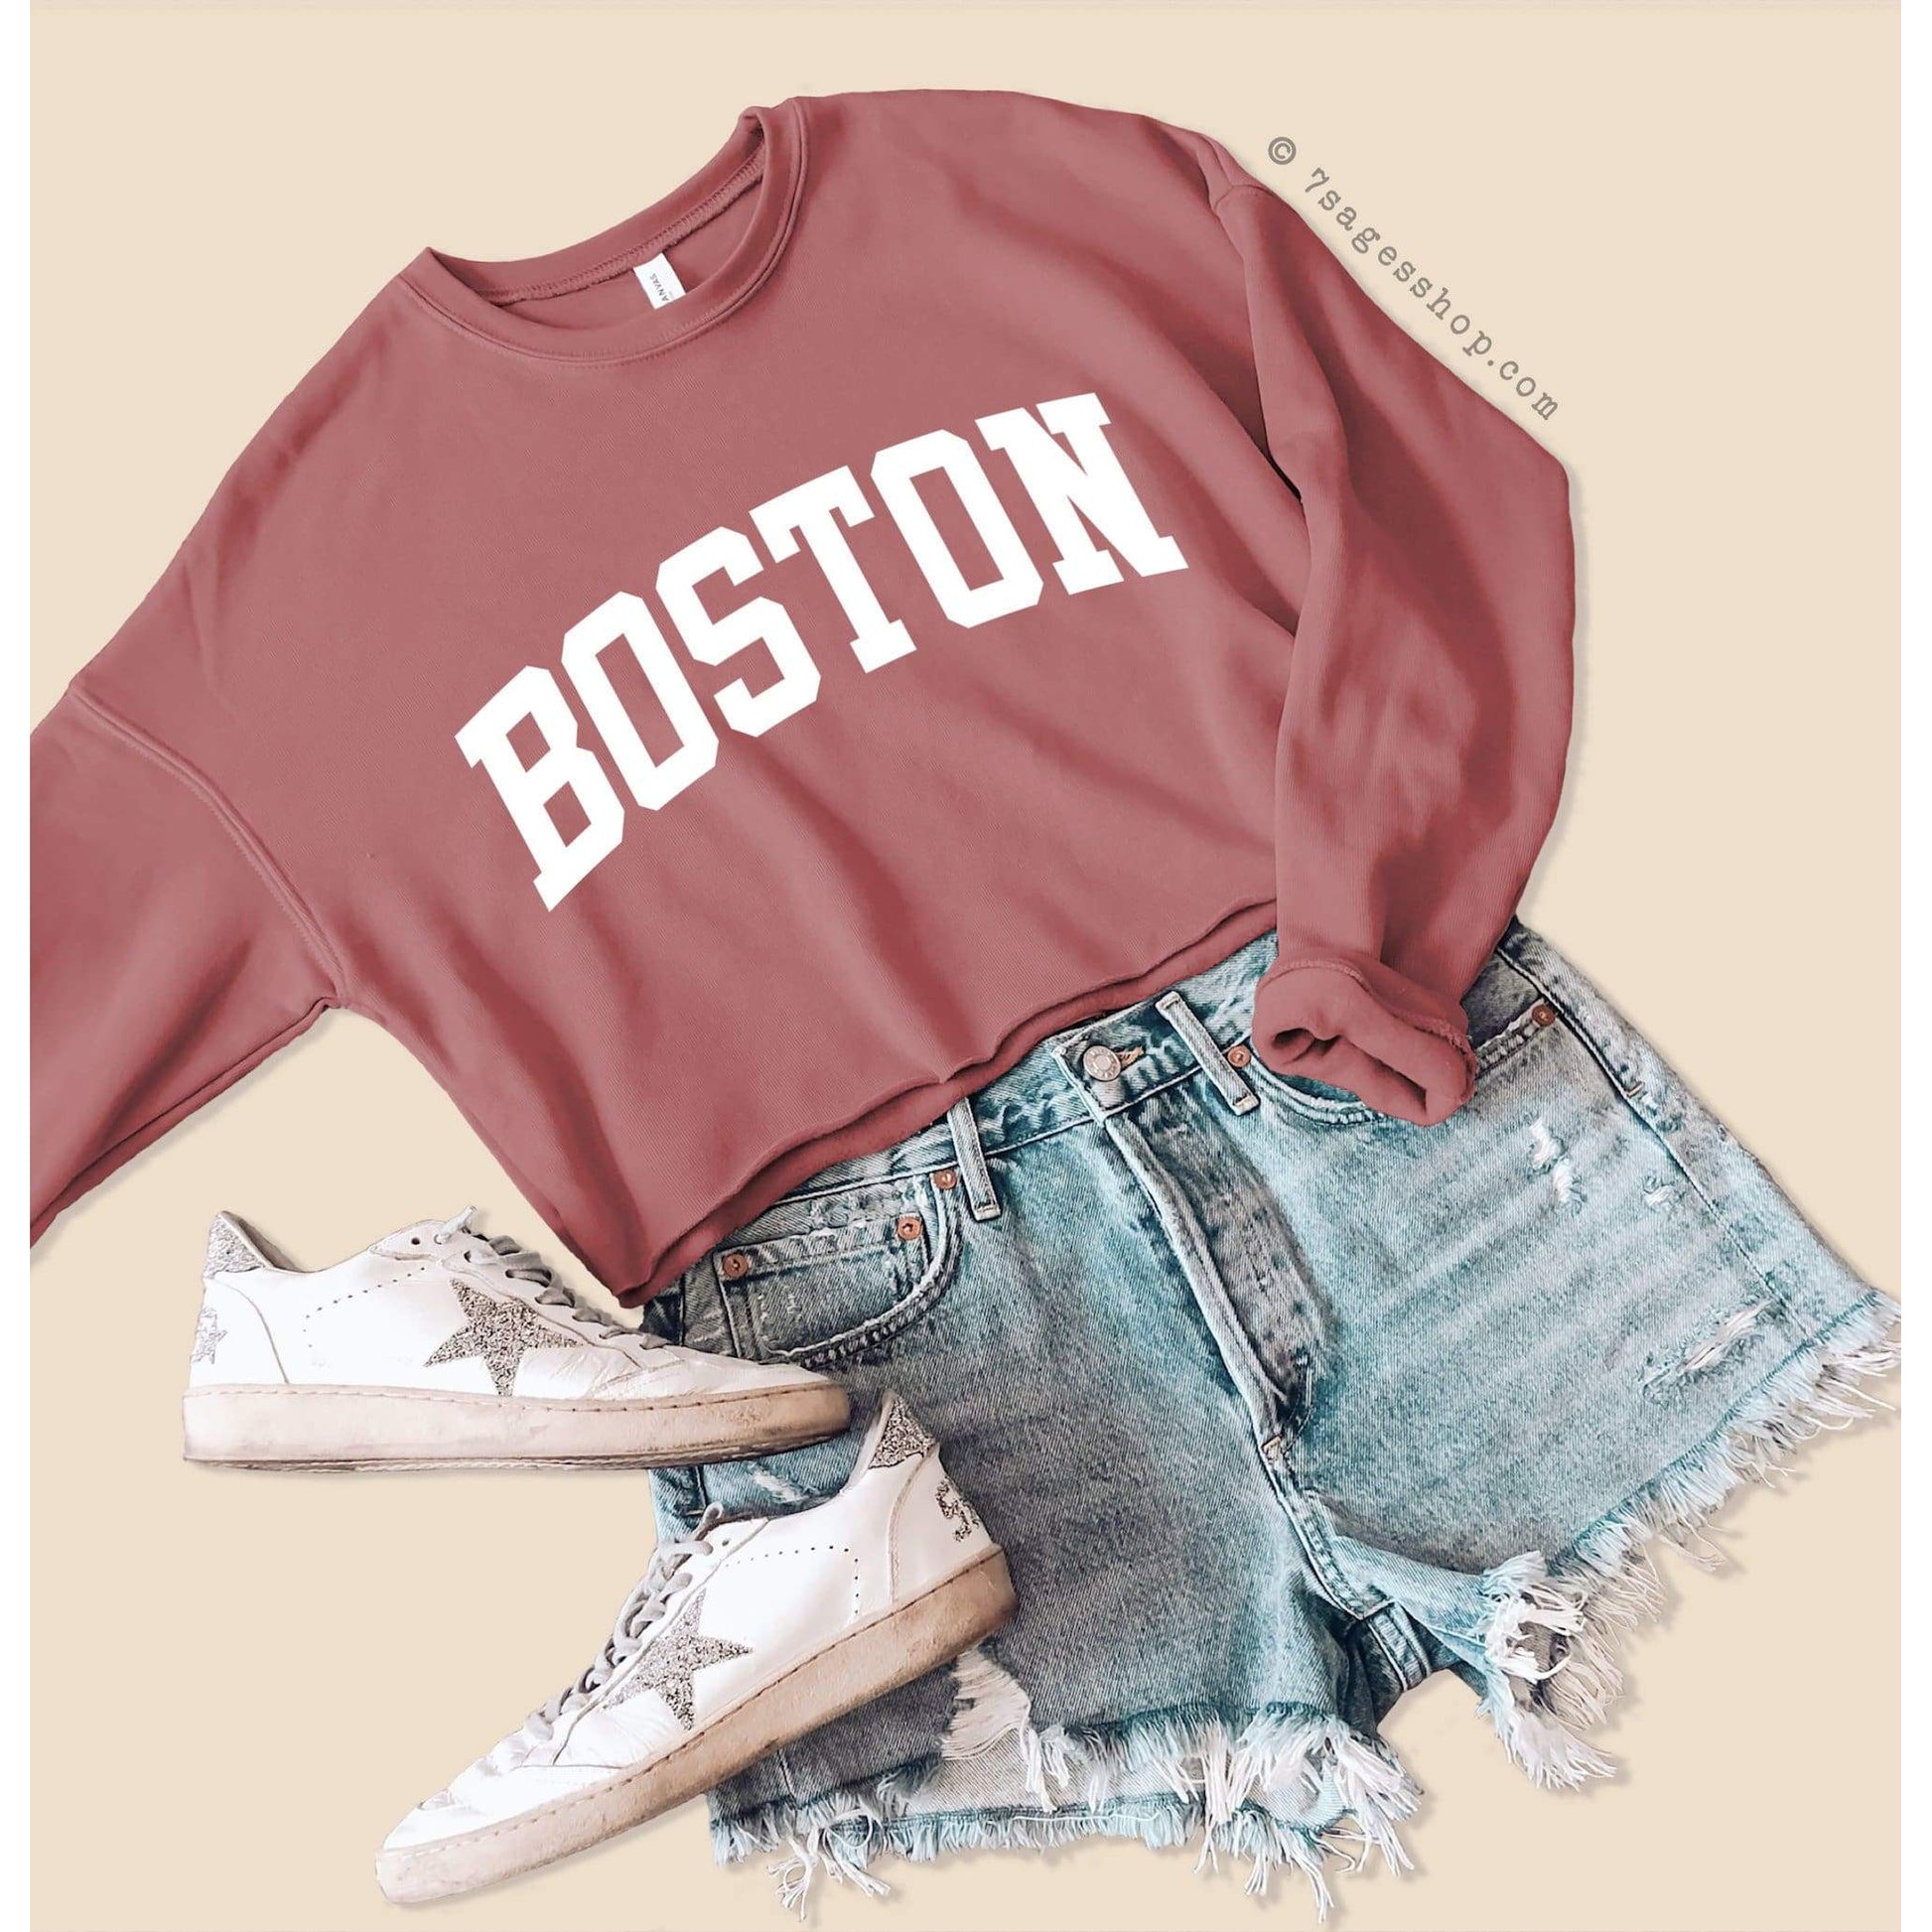 Boston Cropped Sweatshirt - Boston Sweatshirt - Boston Shirts - Boston Crop Top - Fleece Sweatshirt